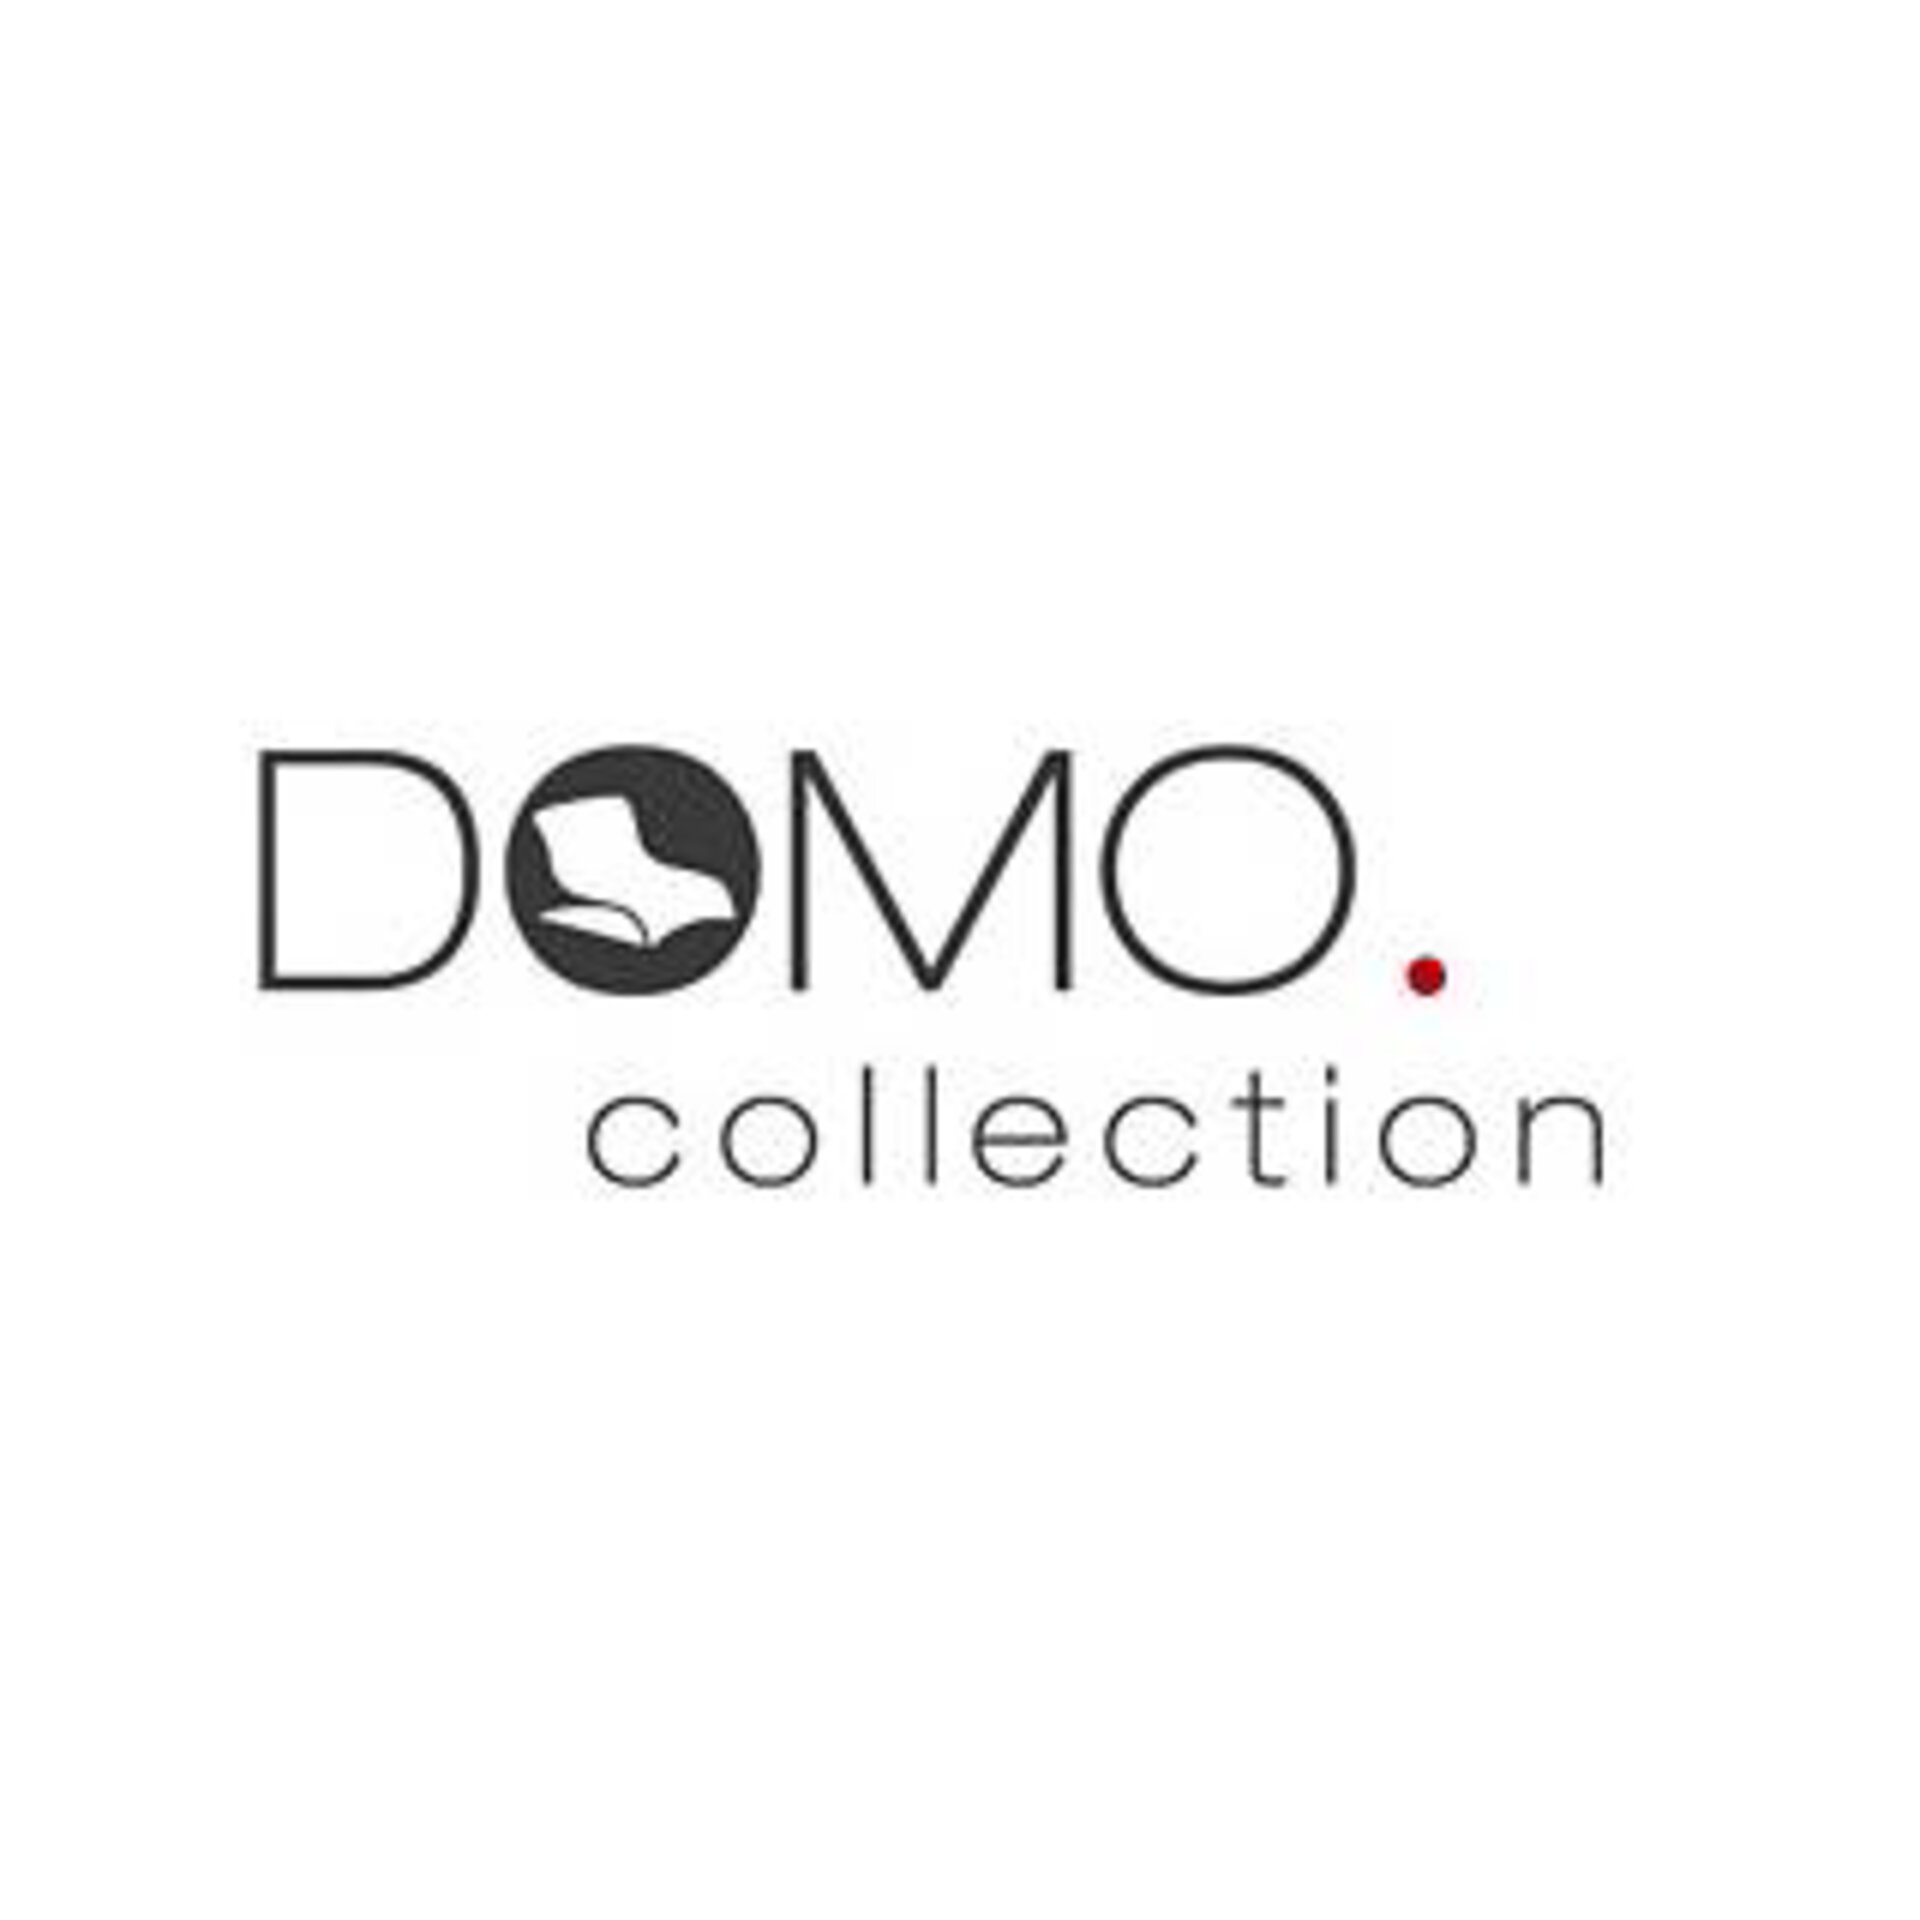 Domo Collection